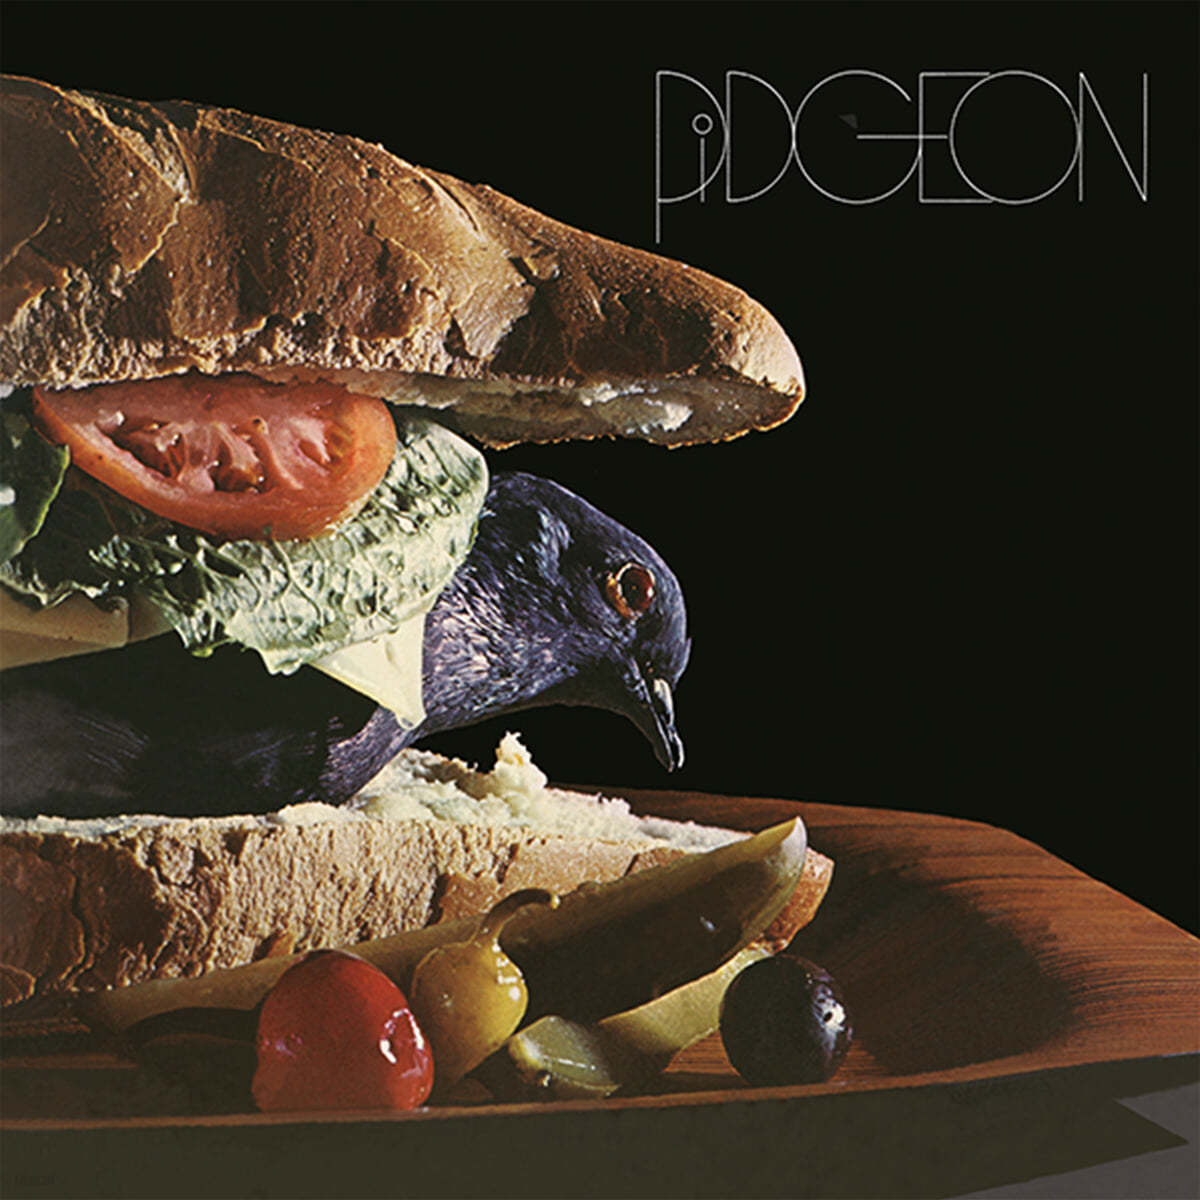 Pidgeon (피전) - Pidgeon 